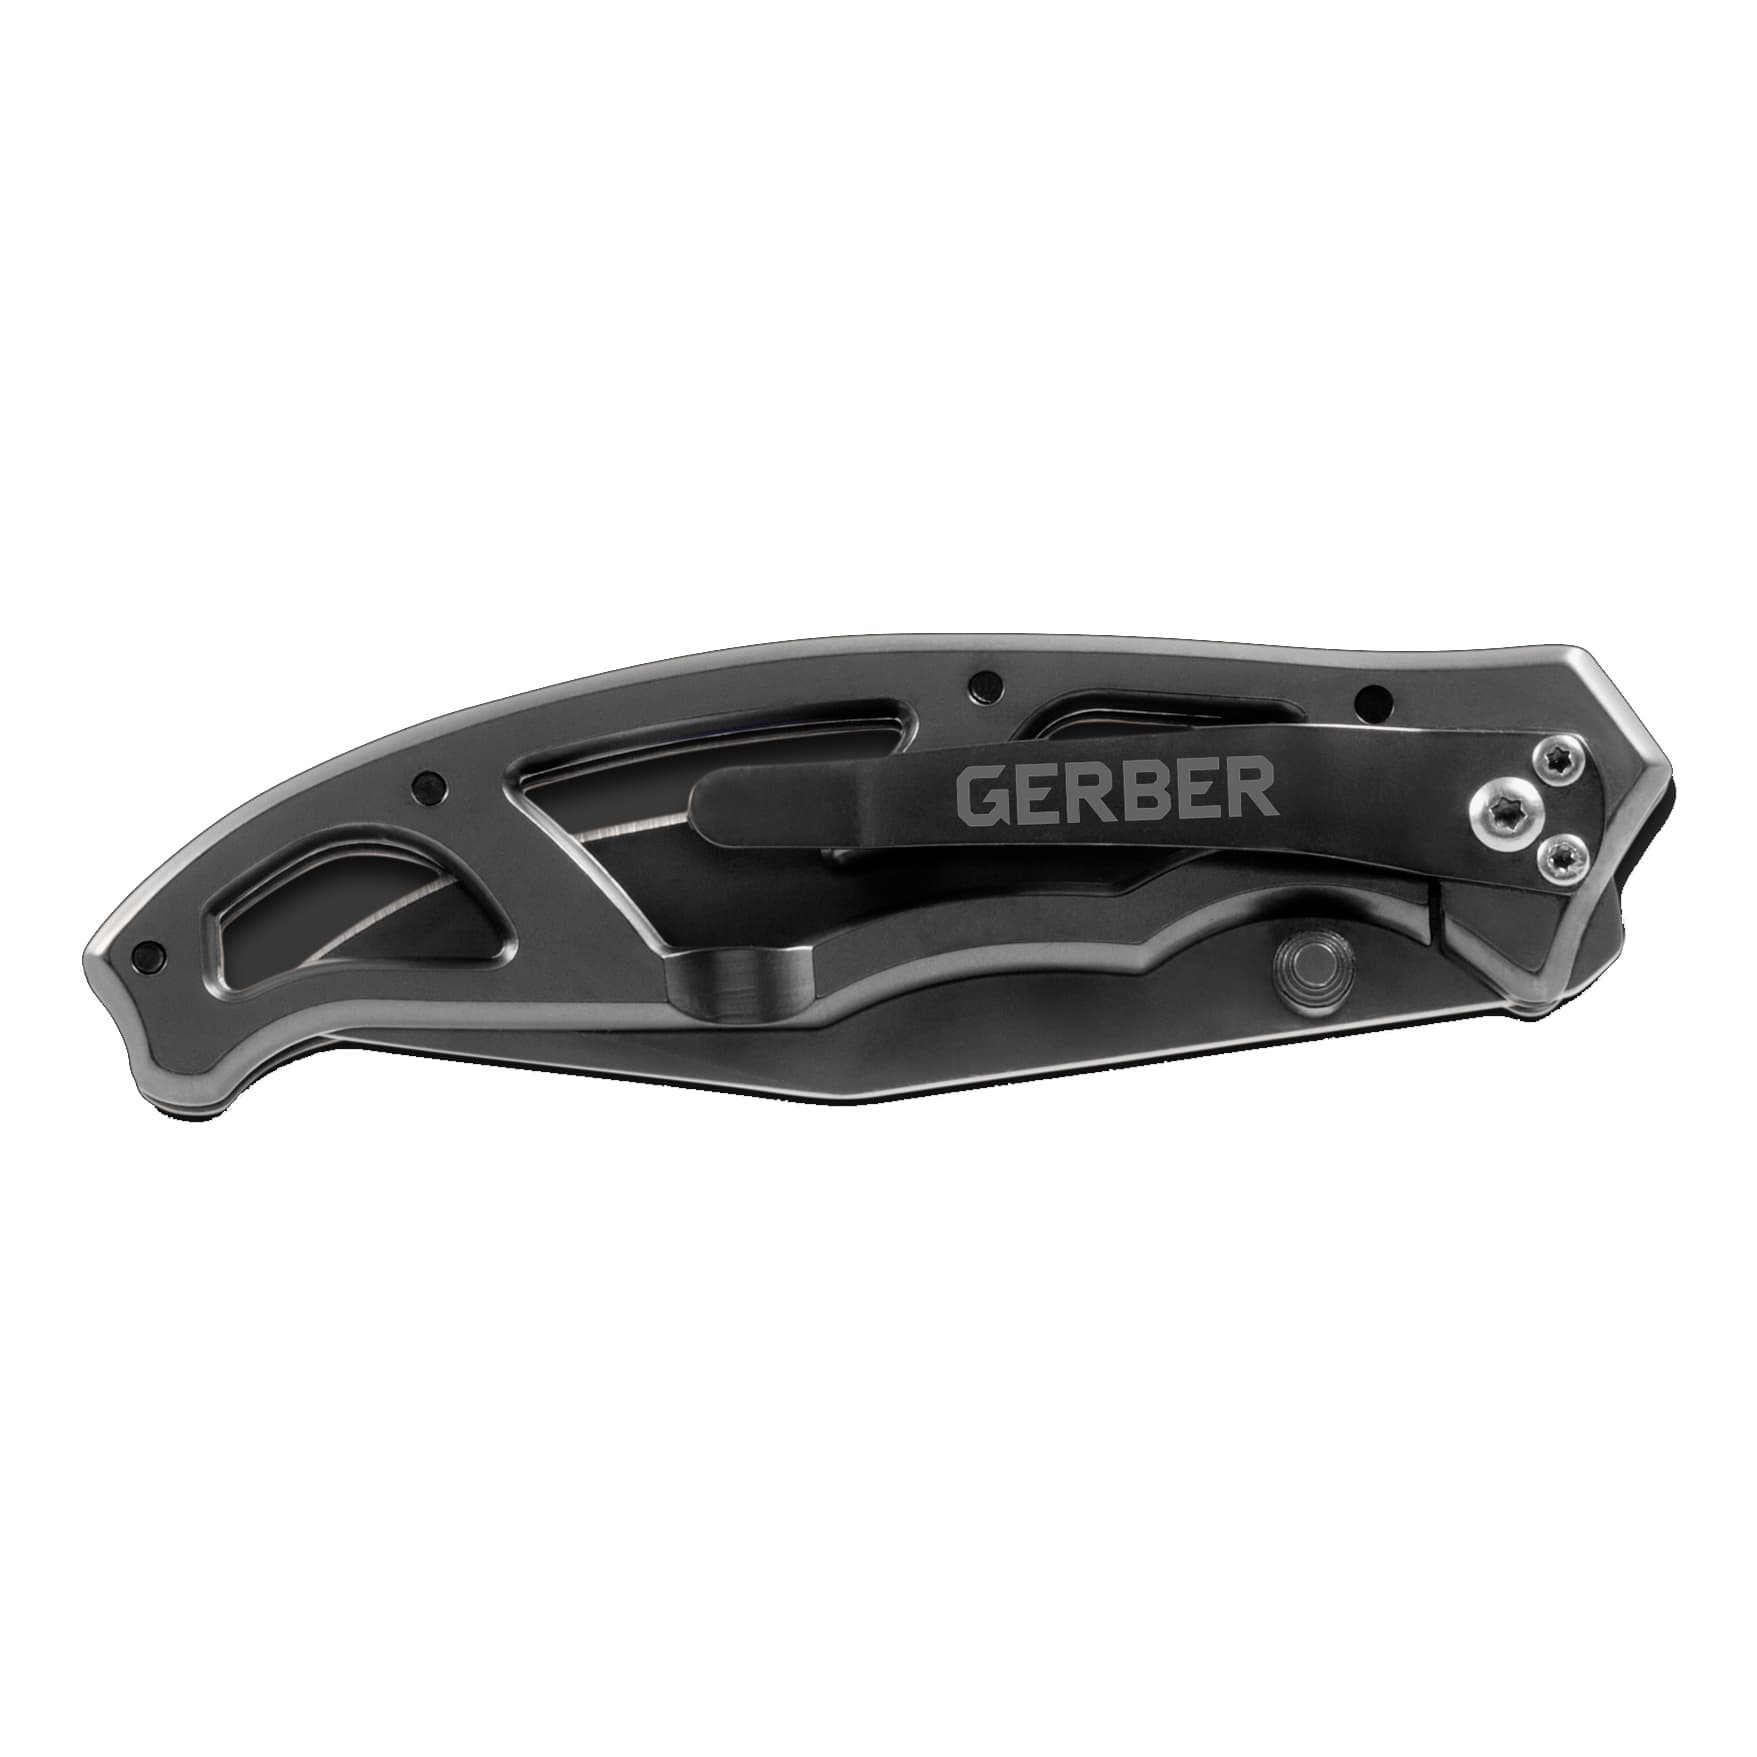 Gerber® Paraframe Serrated Folding Knife - Closed View